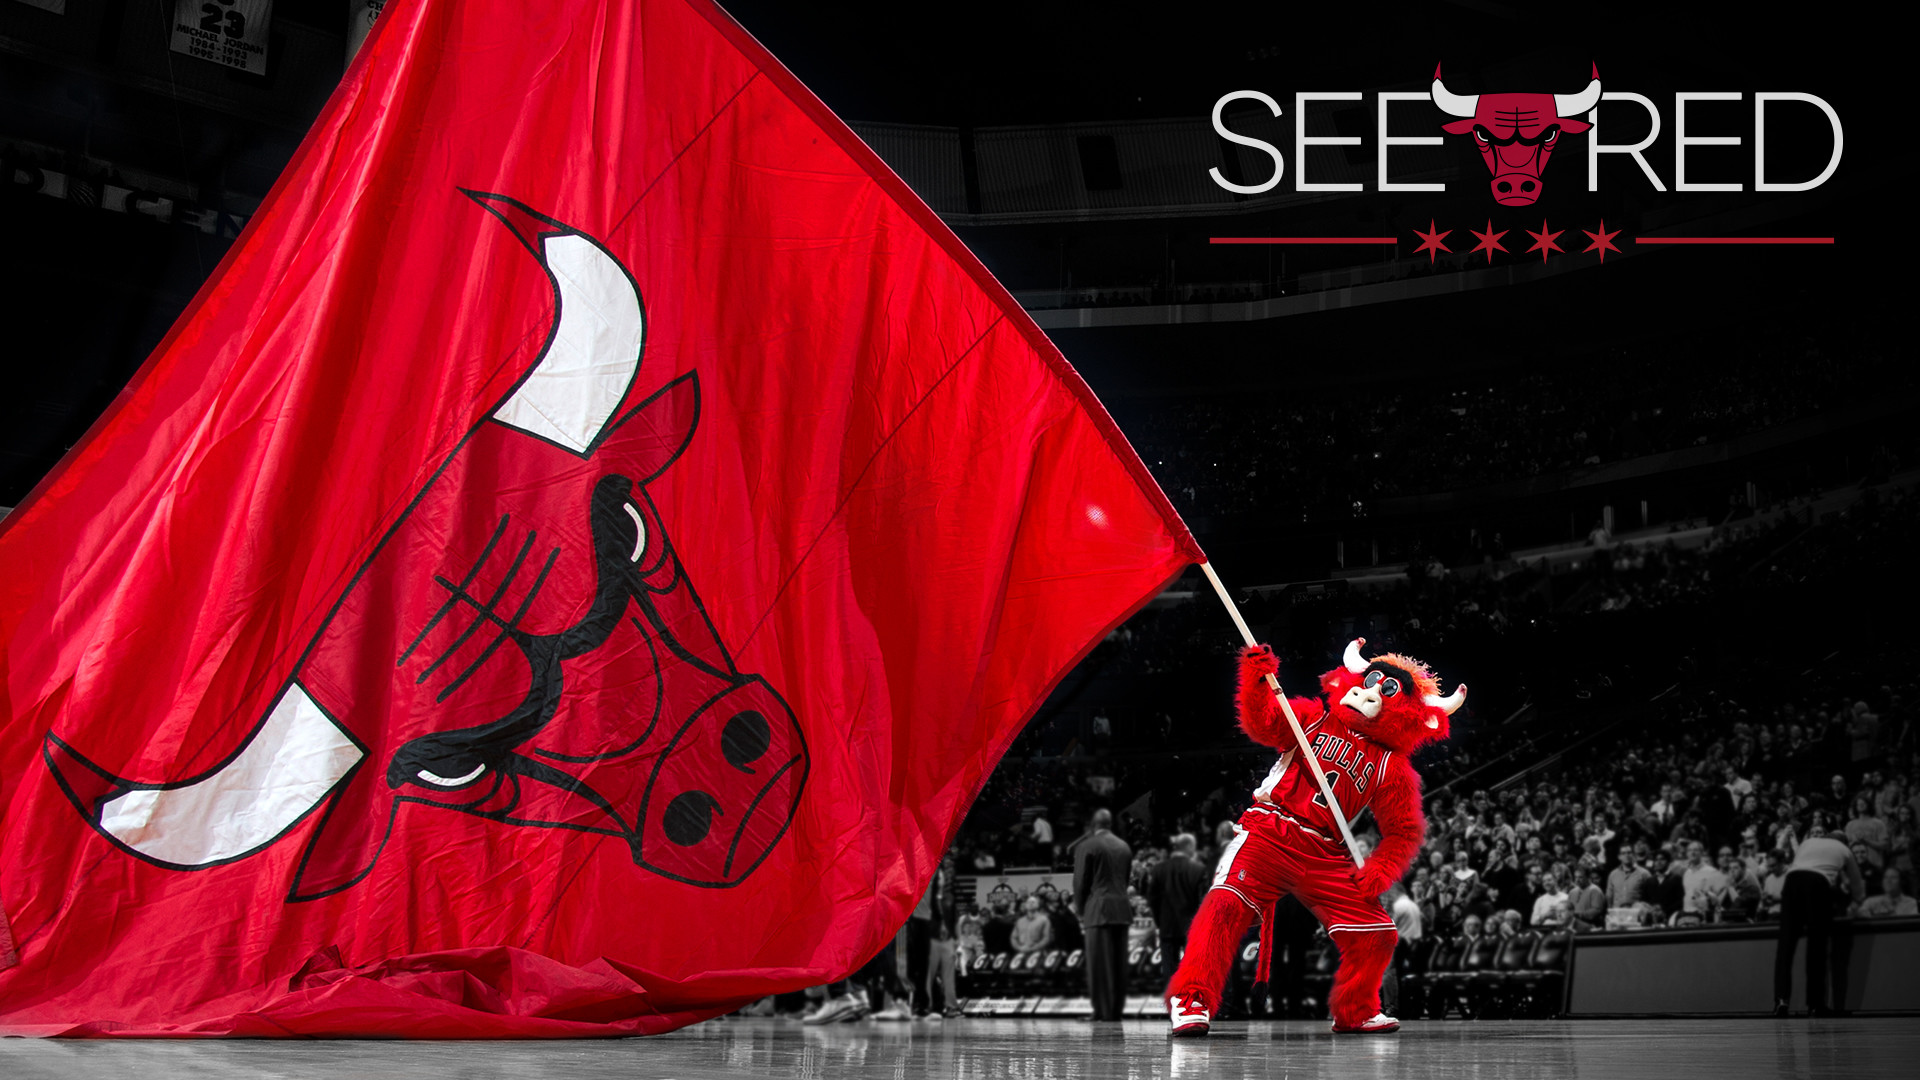 1920x1080 Chicago Bulls | 2014 NBA Playoffs | See Red